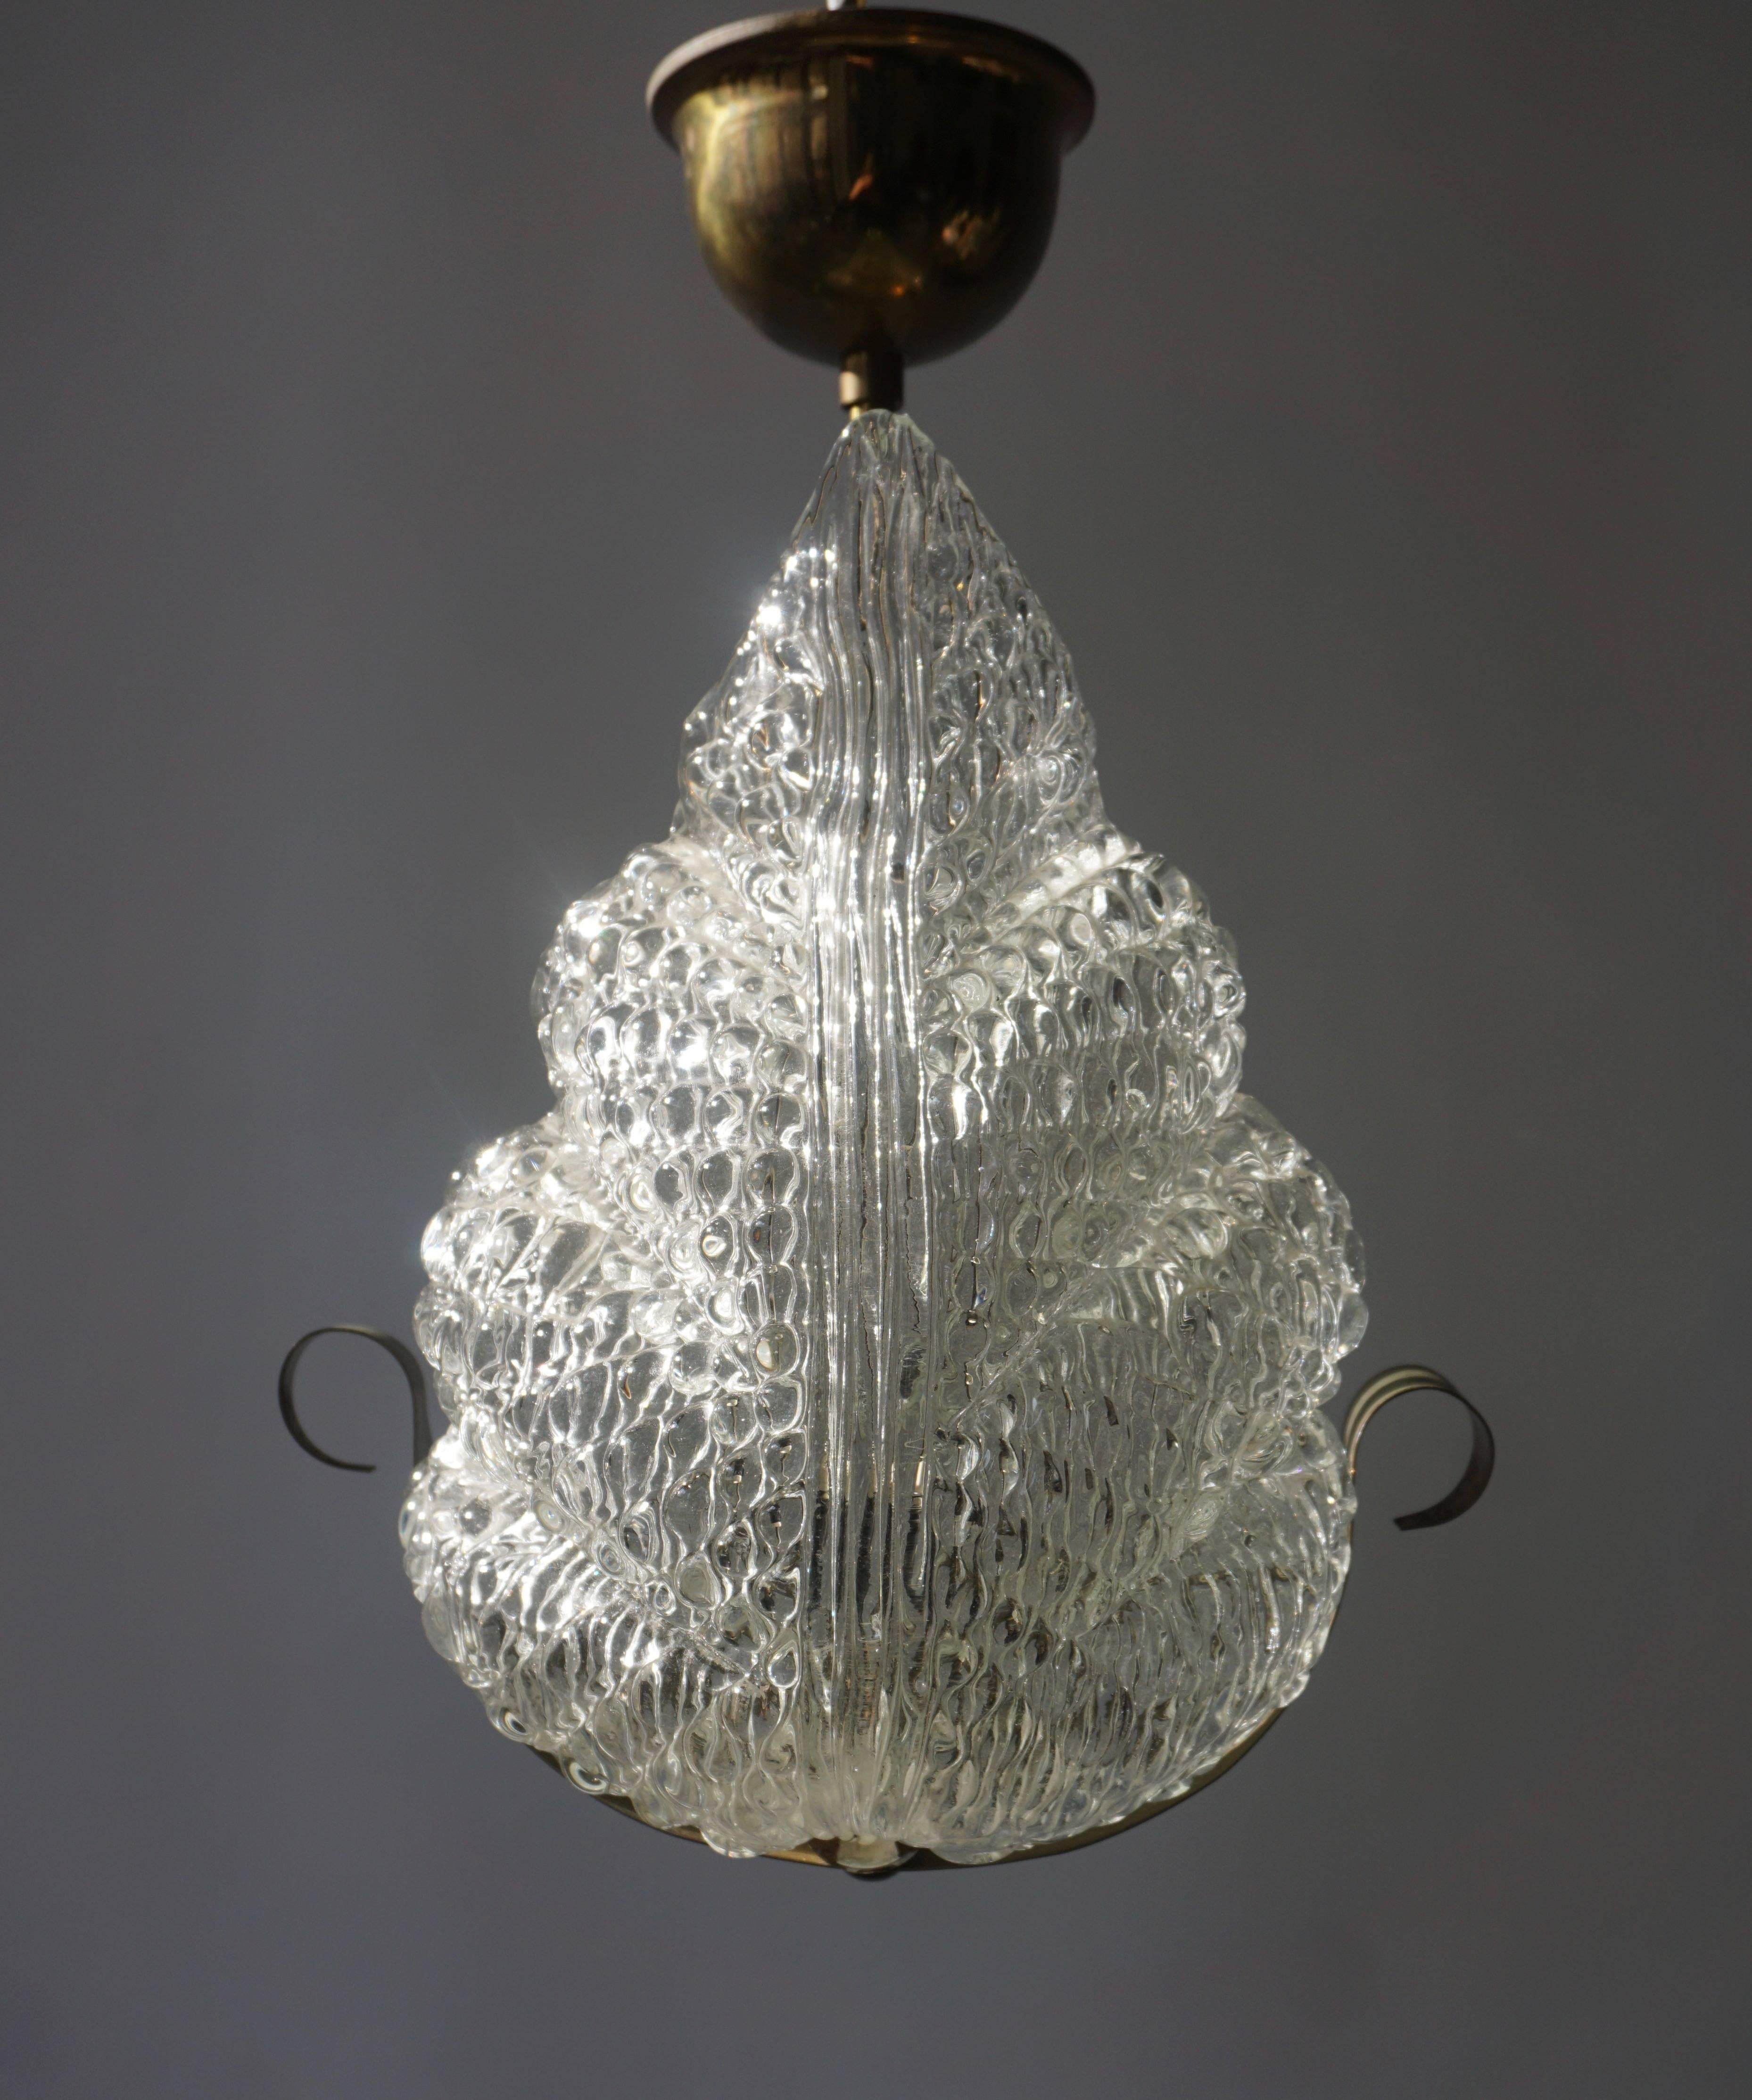 One Murano glass pendant light.
Measures: Height 28 cm.
Width 25 cm.
Two E14 bulbs.